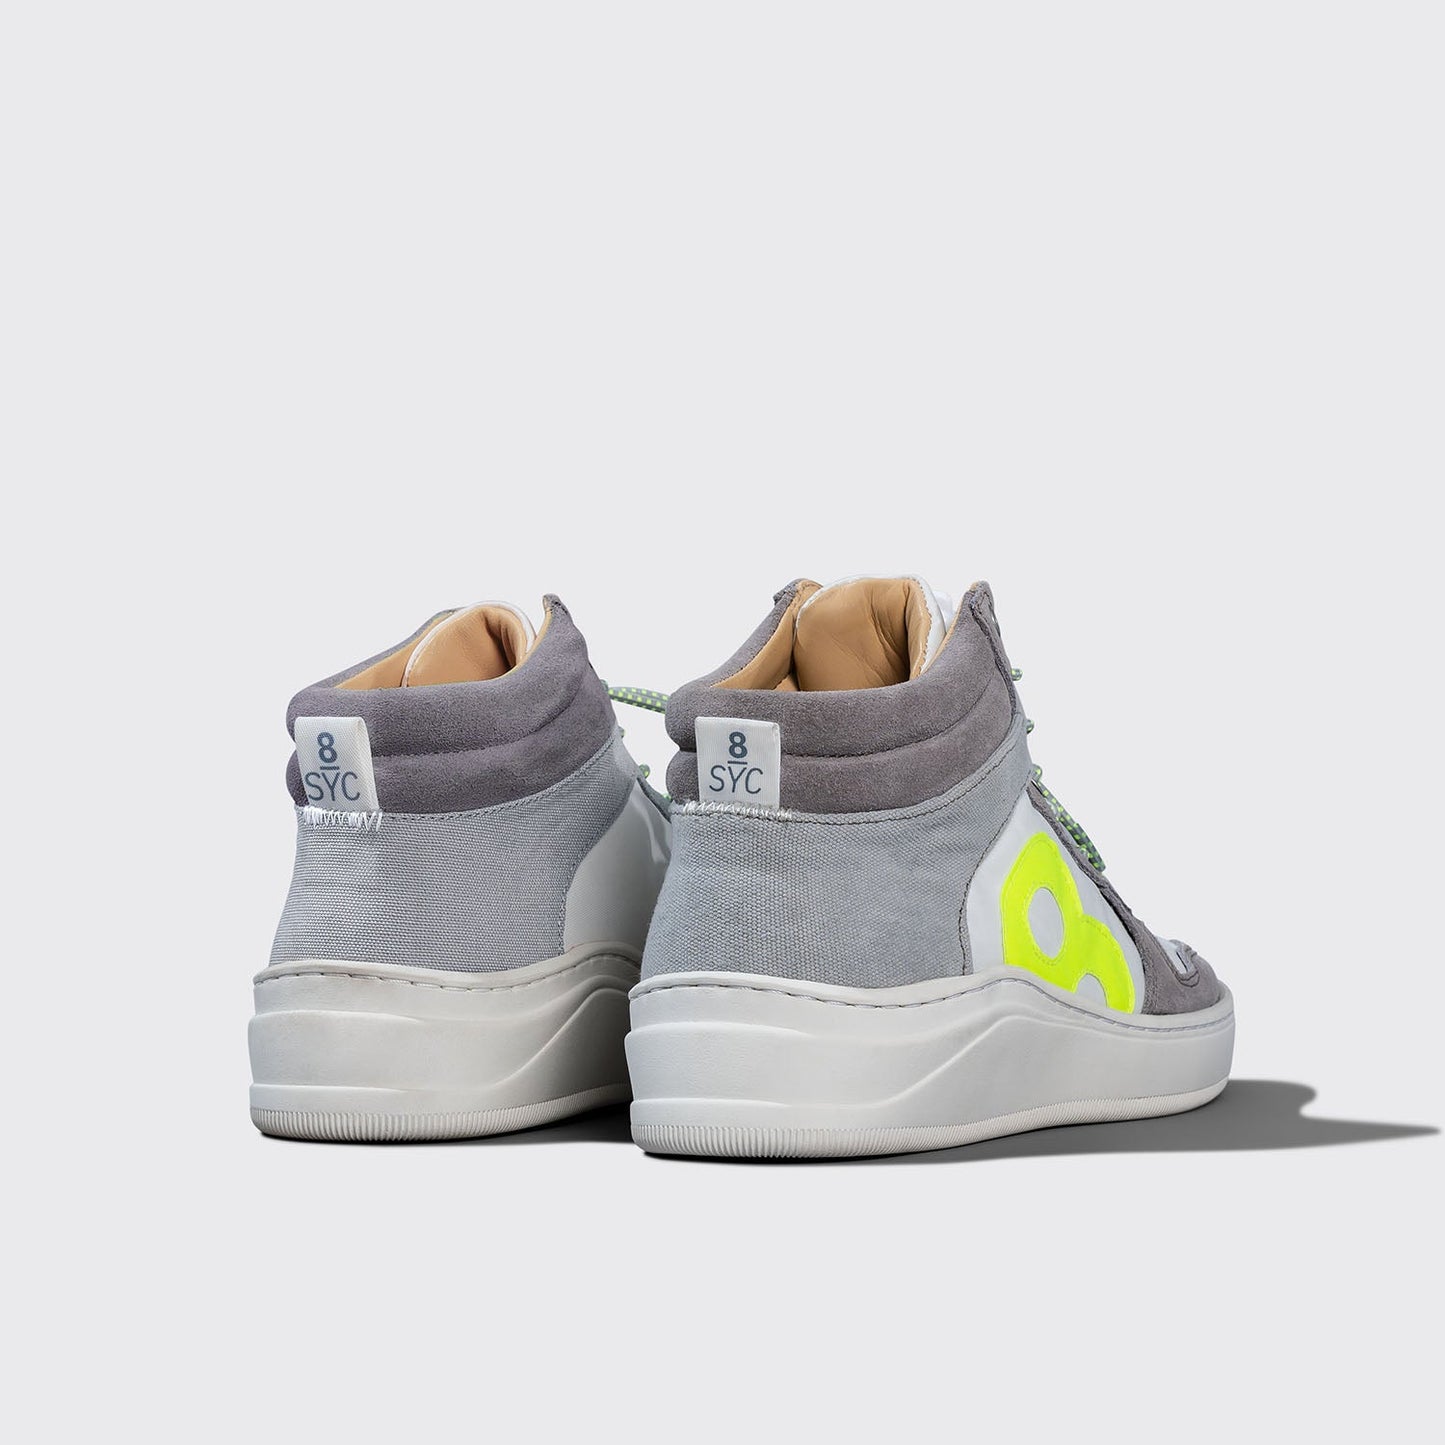 OAK ISLAND Herren Sneaker - safety grey